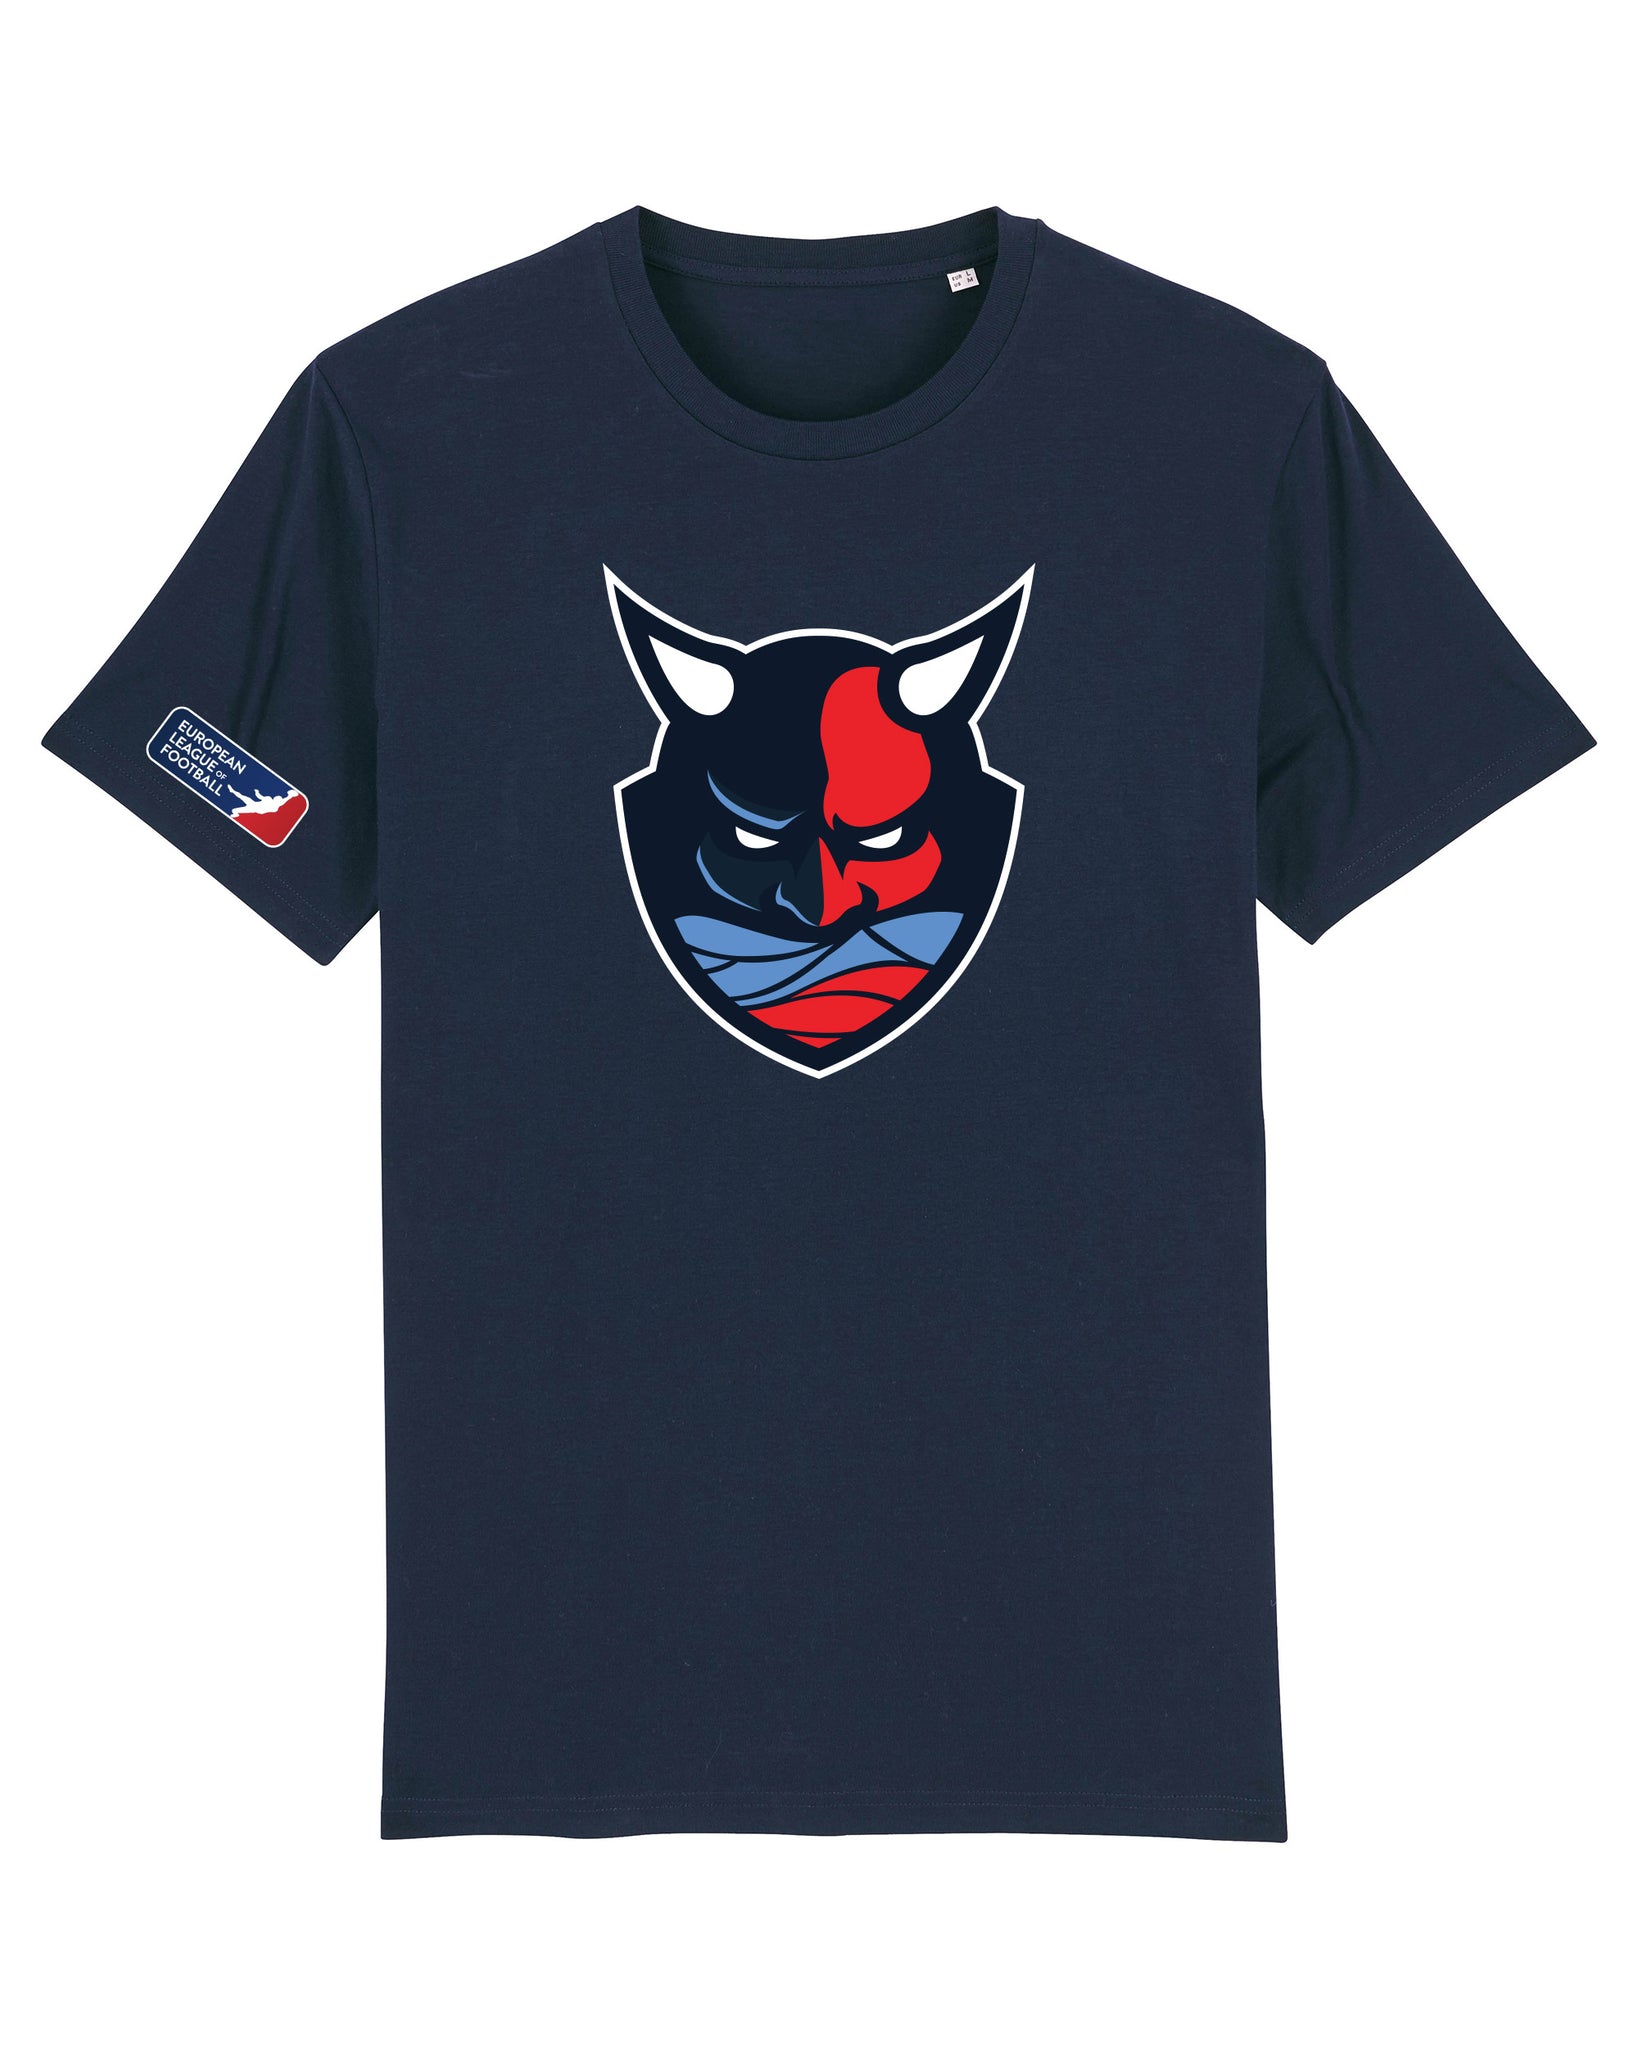 Hamburg Sea Devils Iconic T-Shirt